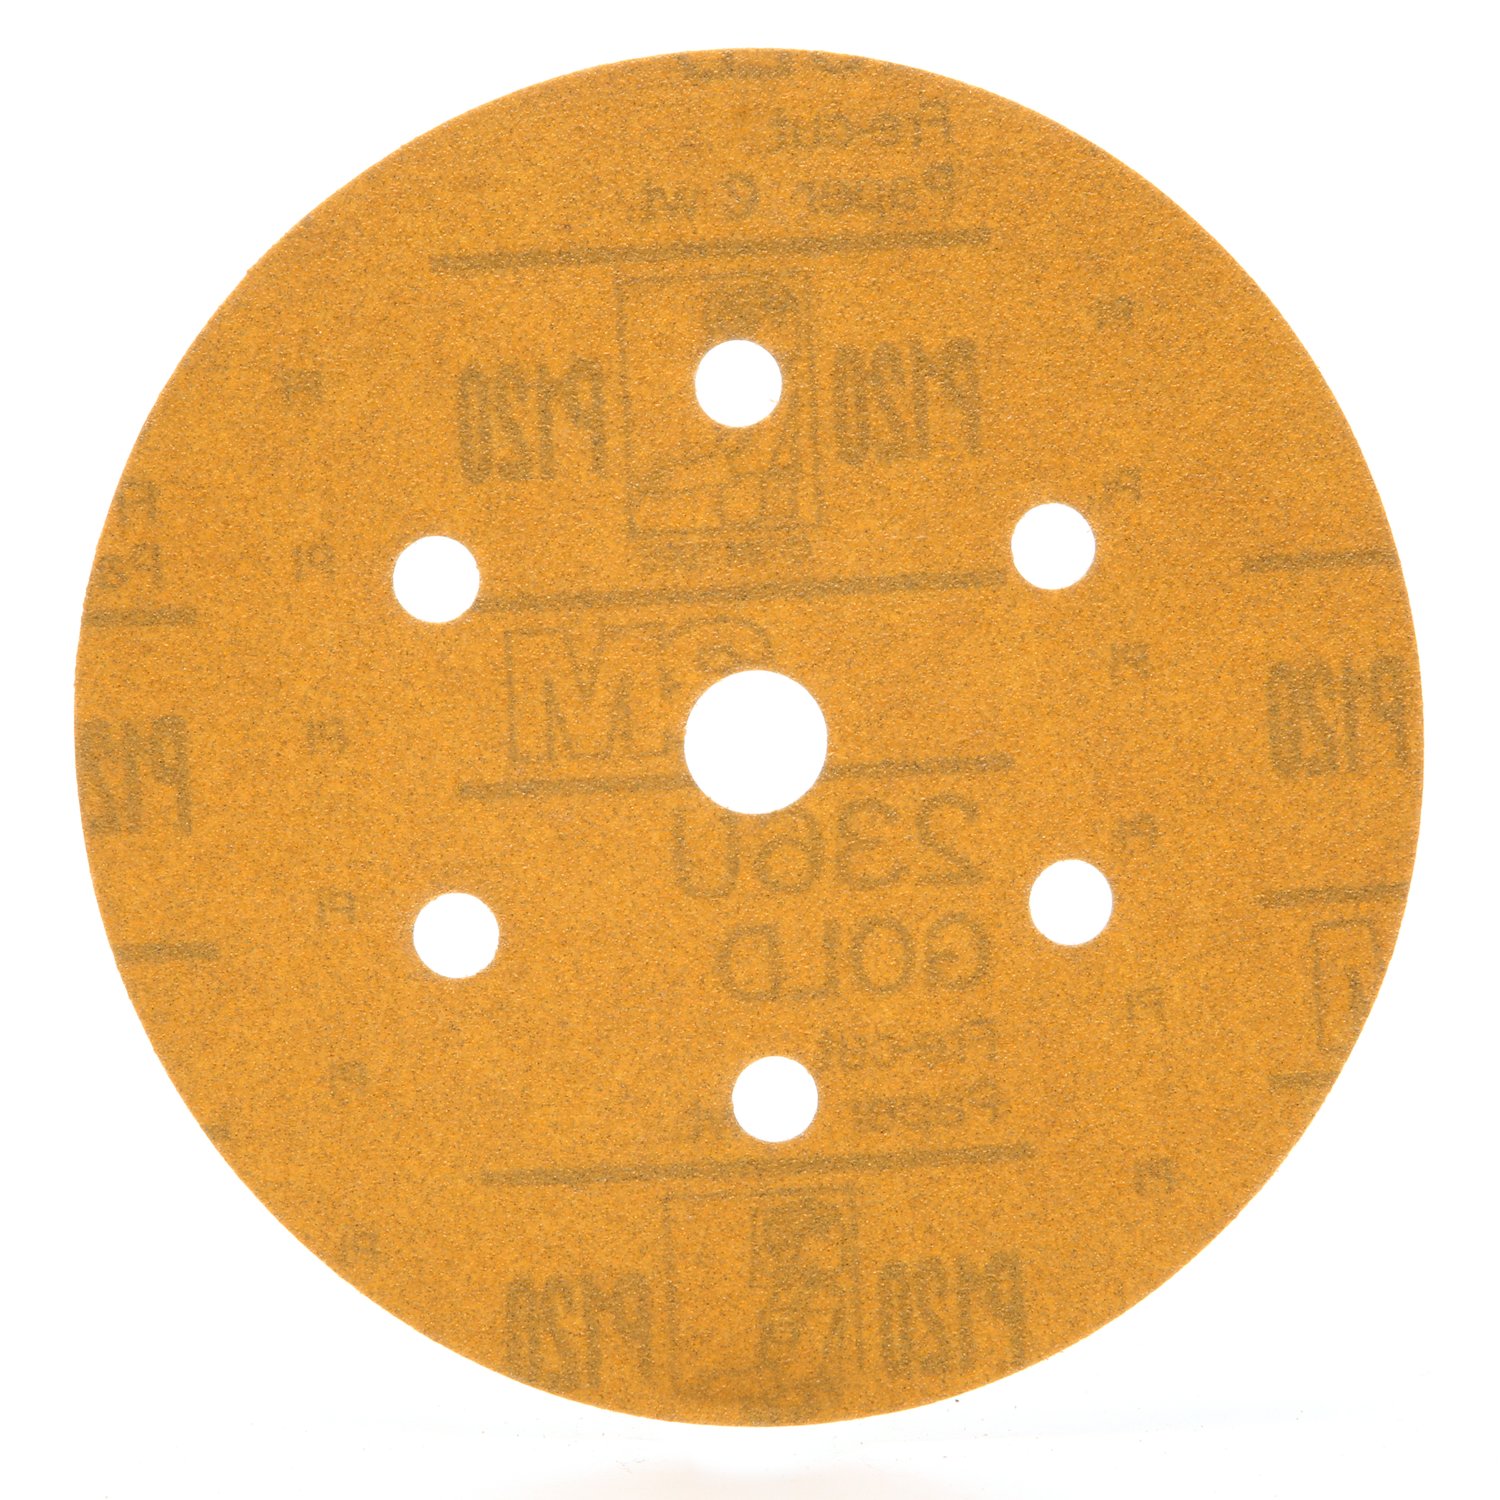 7000118769 - 3M Hookit Gold Disc Dust Free 236U, 01081, 6 in, P120, 100 discs per
carton, 4 cartons per case